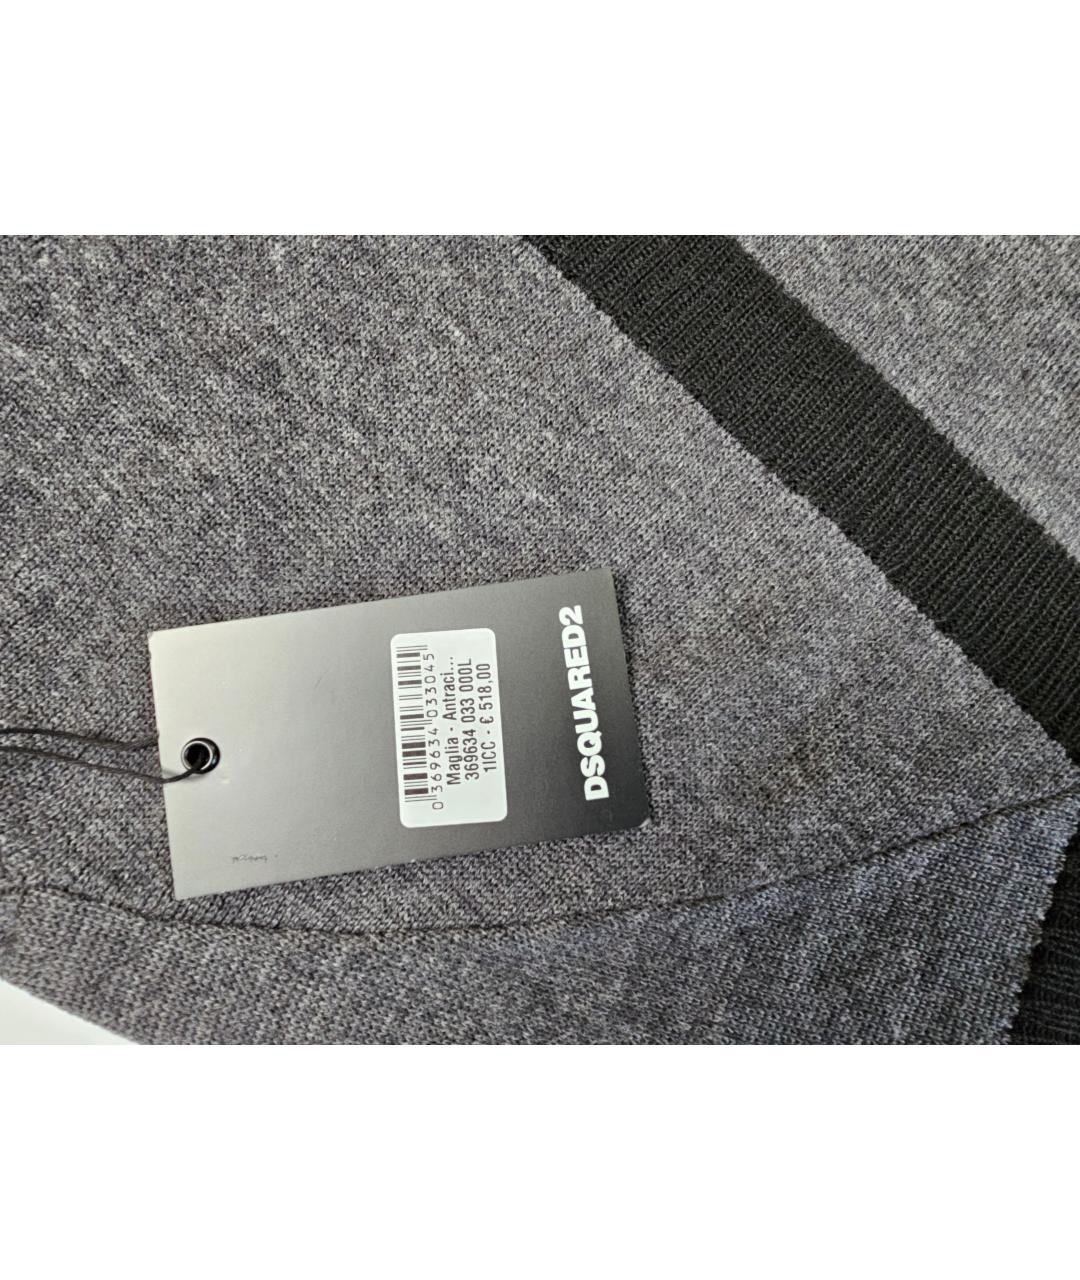 DSQUARED2 Серый шерстяной джемпер / свитер, фото 5